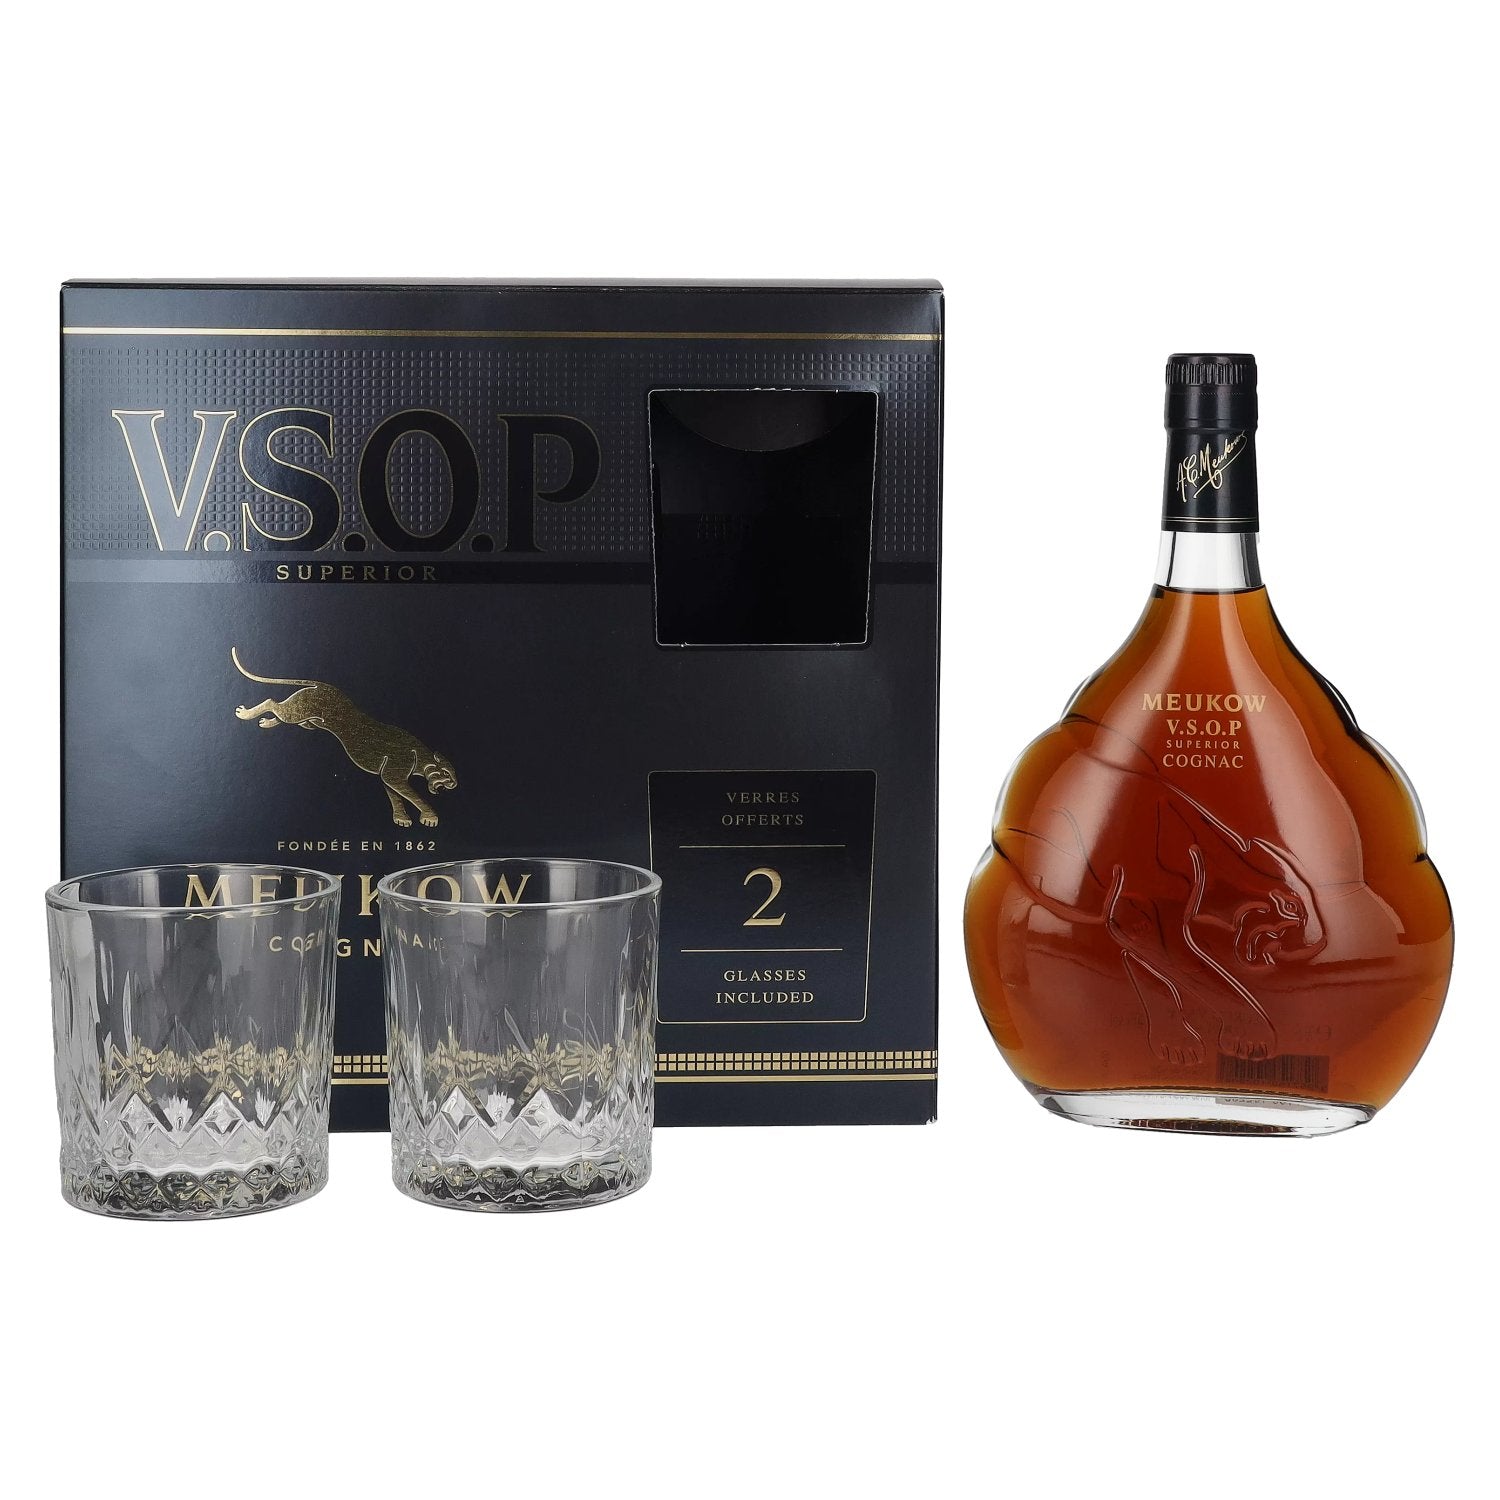 Meukow V.S.O.P Superior Cognac 40% Vol. 0,7l in Giftbox with 2 glasses